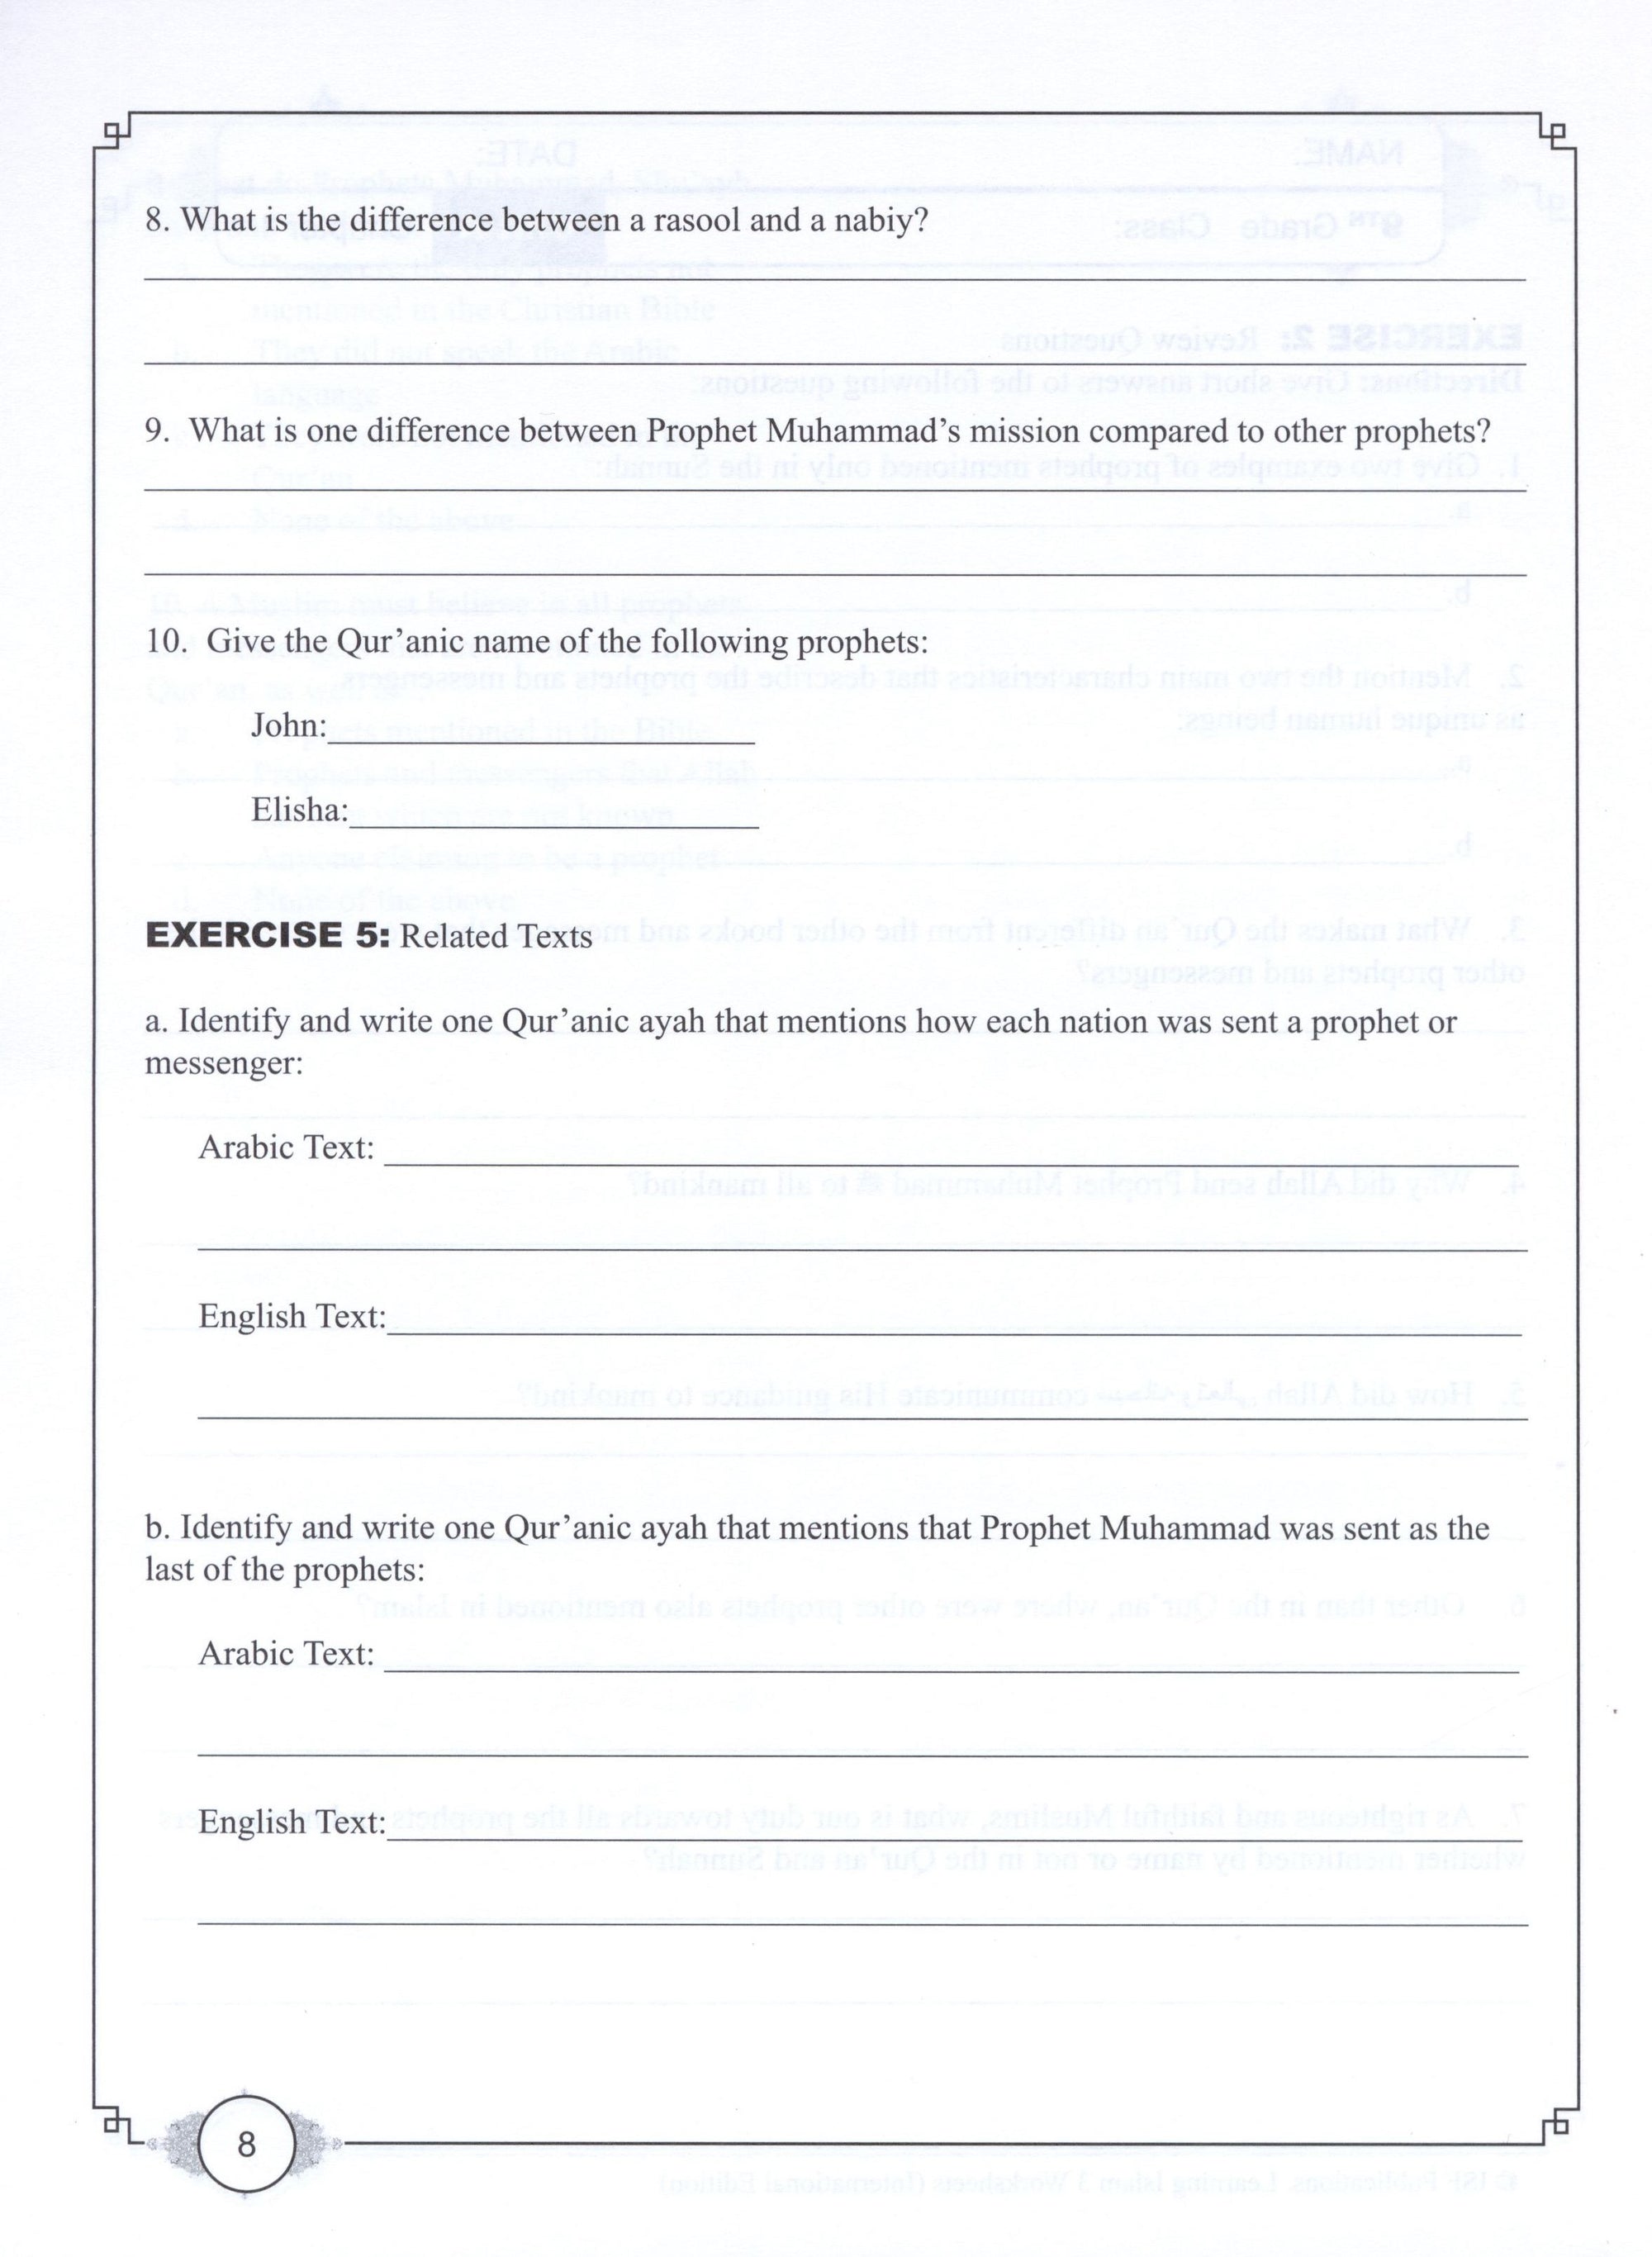 Learning Islam Workbook Level 3 (8th Grade)